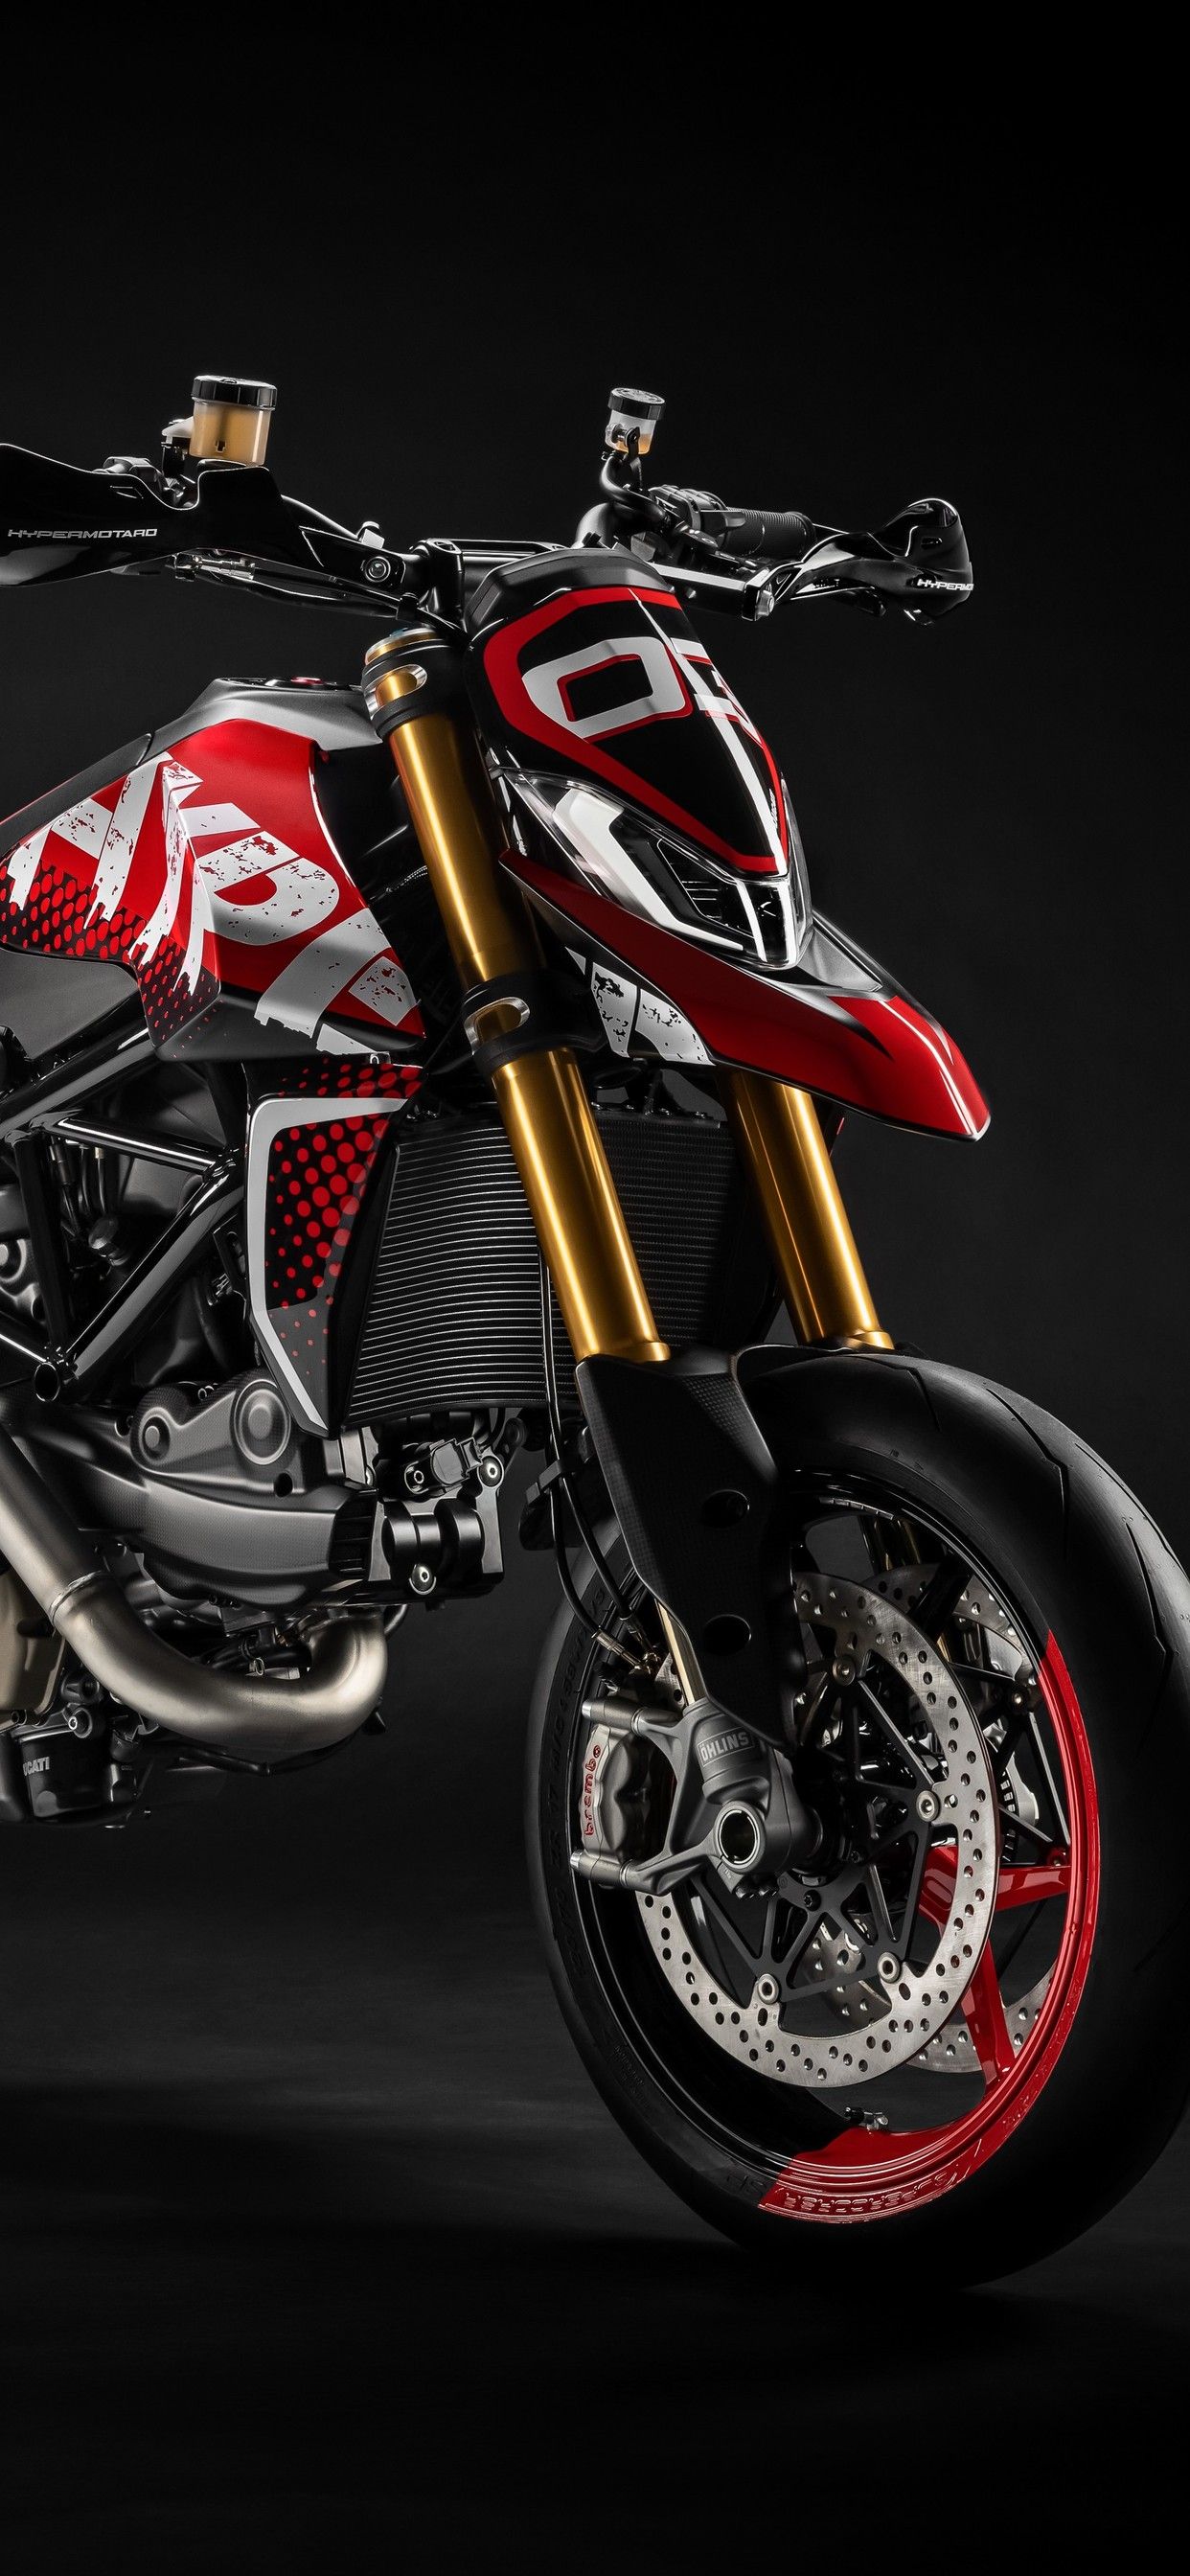 Ducati Hypermotard Background Motorcycle